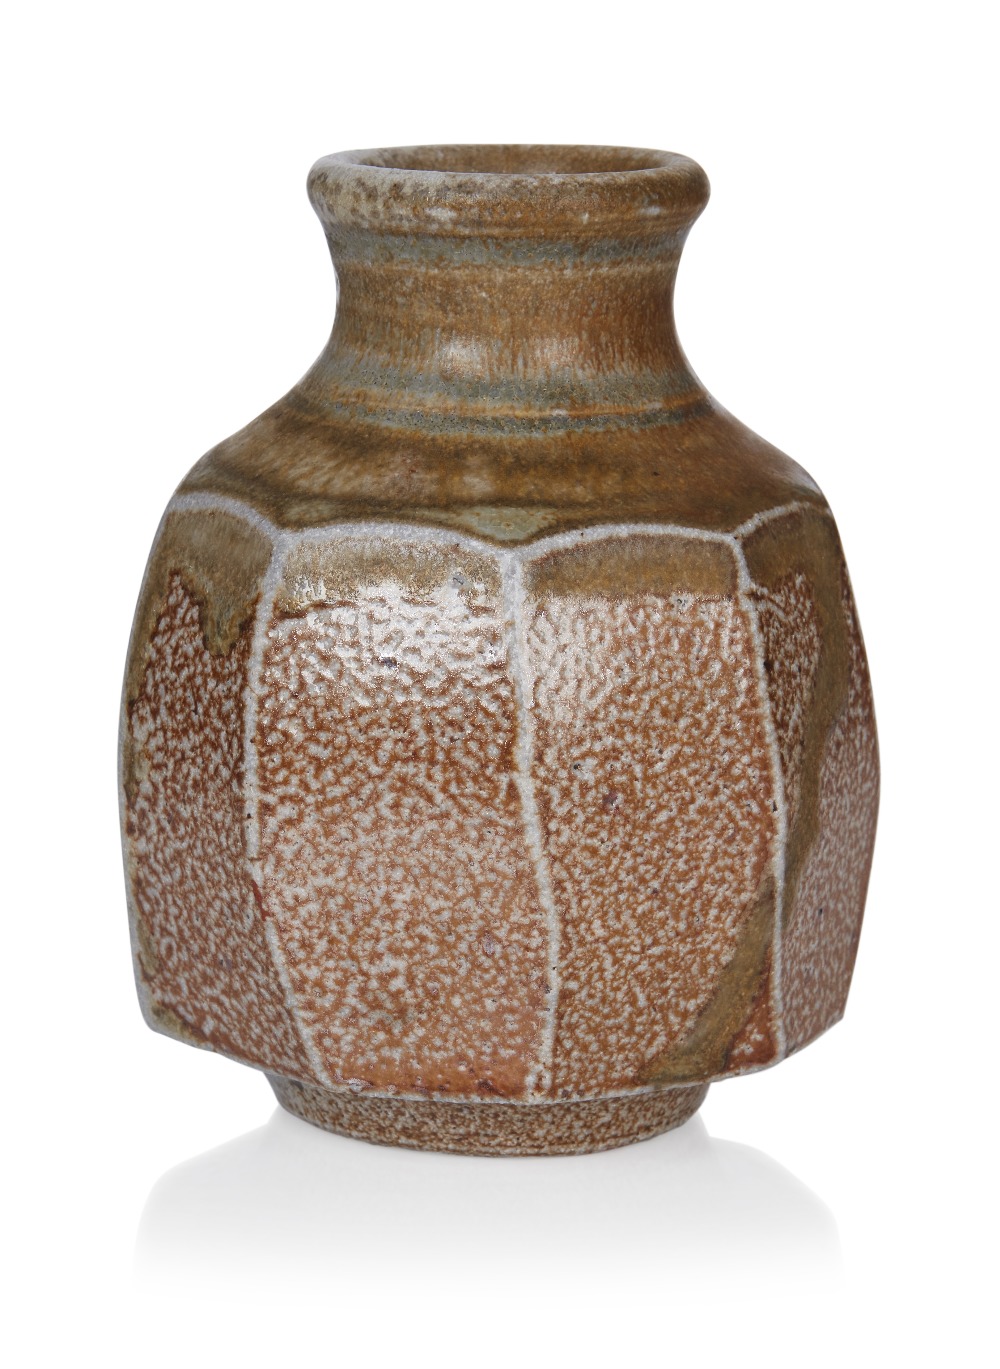 Micki Schloessingk (b.1949), Small sand and khaki coloured cut sided vase, circa 1980s, Glazed